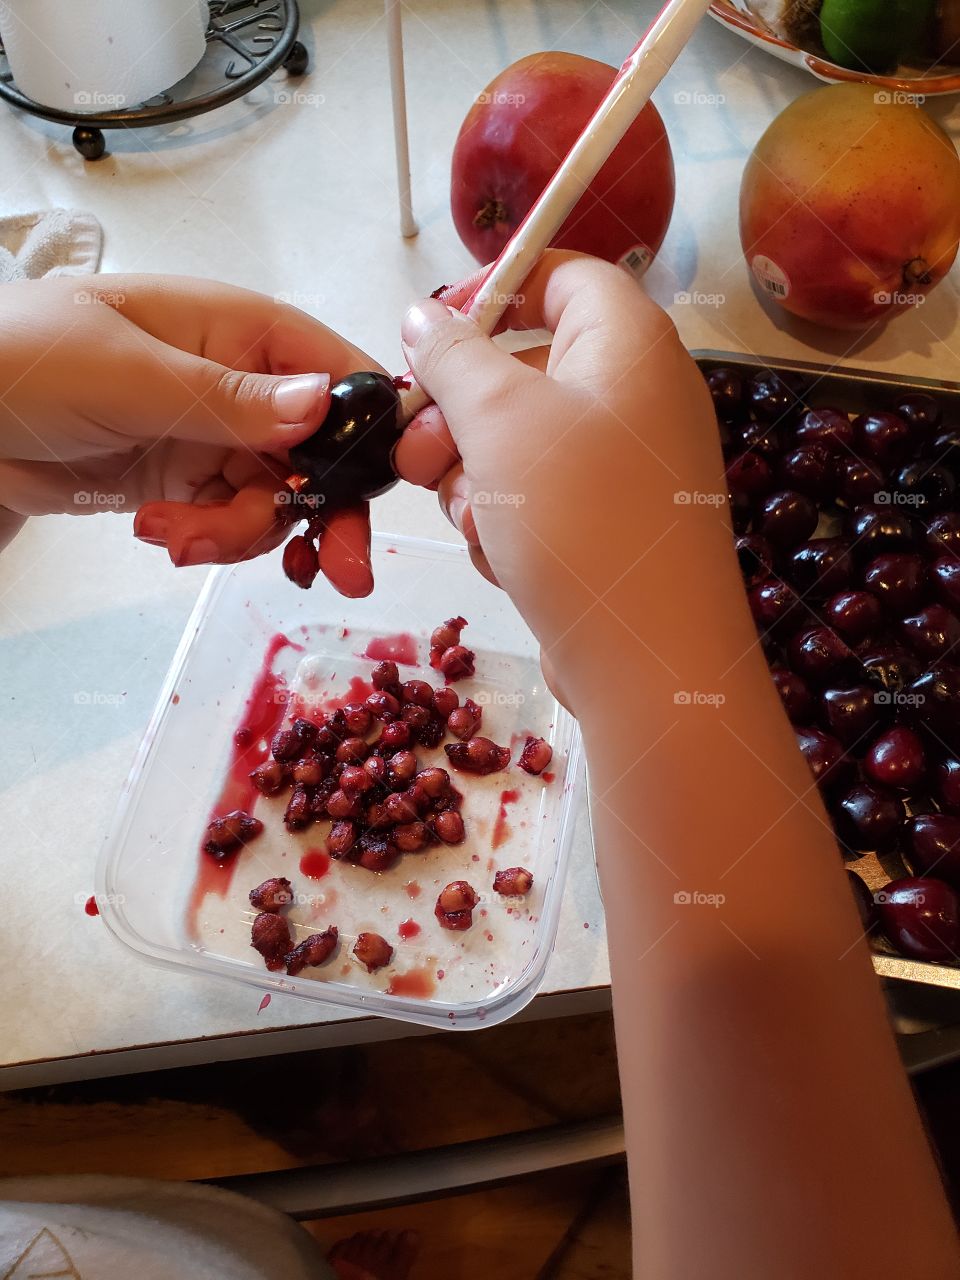 pitting cherries using a straw